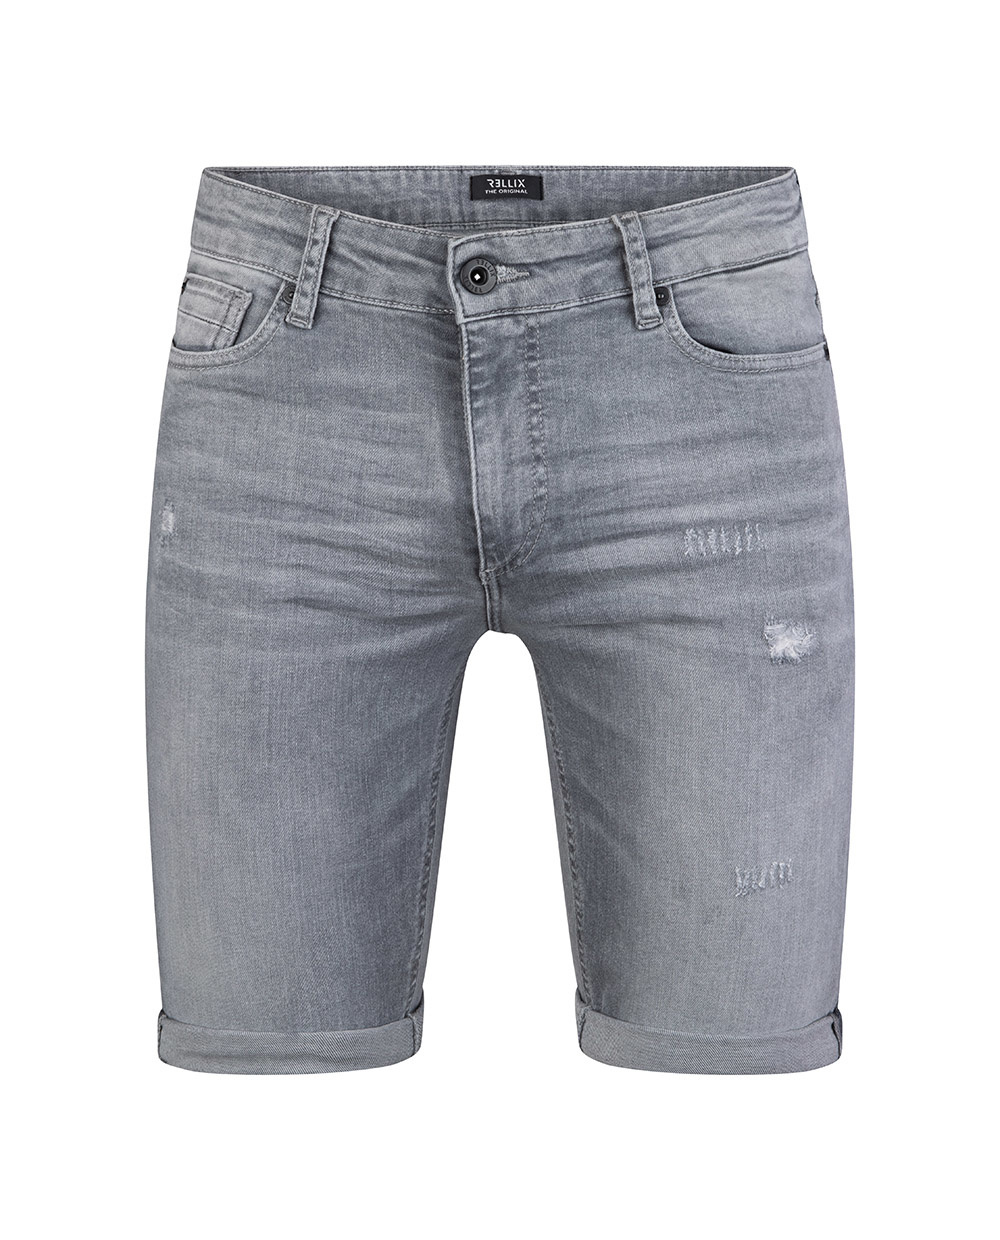 Rellix Jongens jeans short duux - Light Grey Denim